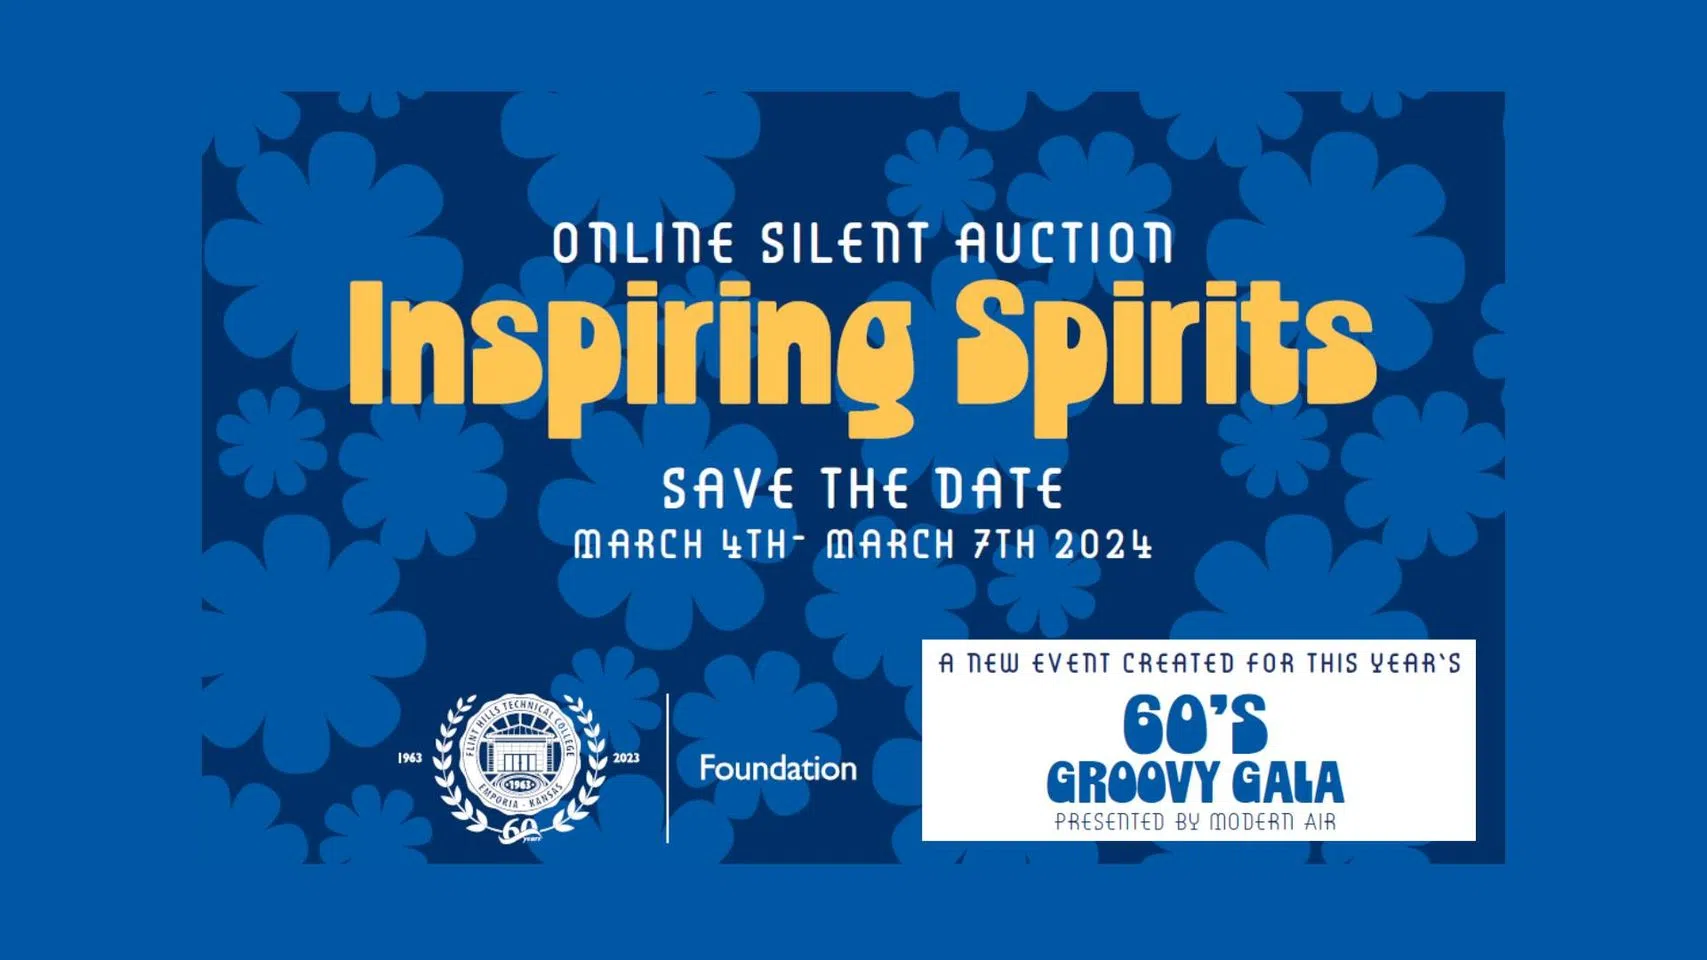 Flint Hills Technical College launches Inspiring Spirits online auction March 4